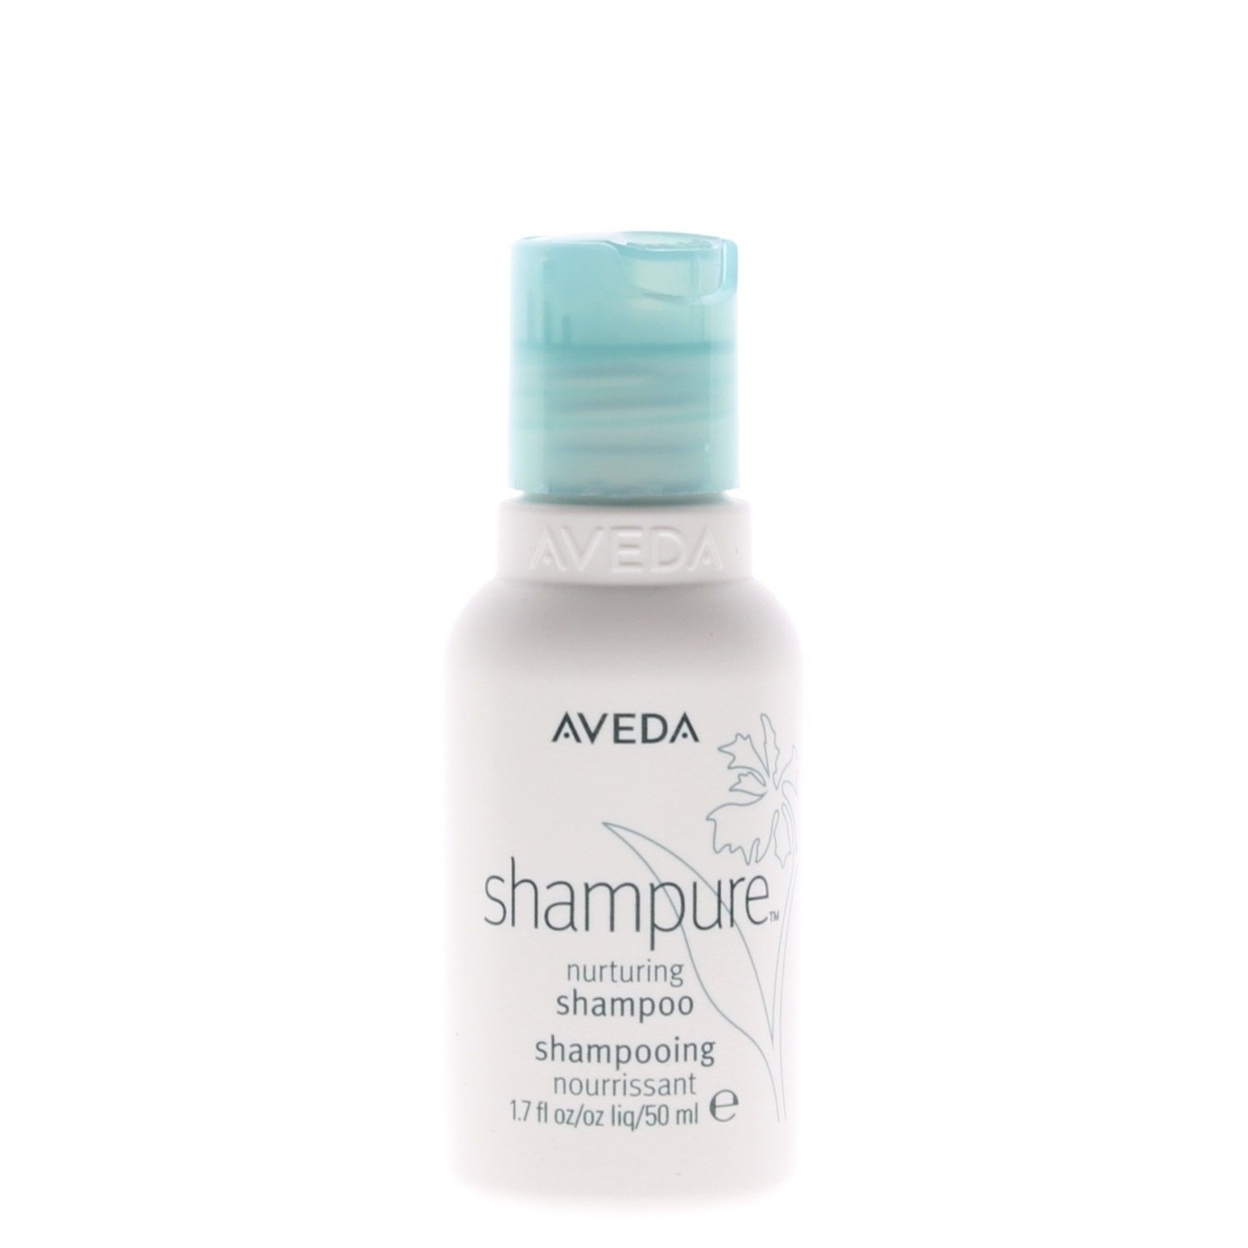 Aveda Shampure Nurturing Shampoo 1.7oz/50ml